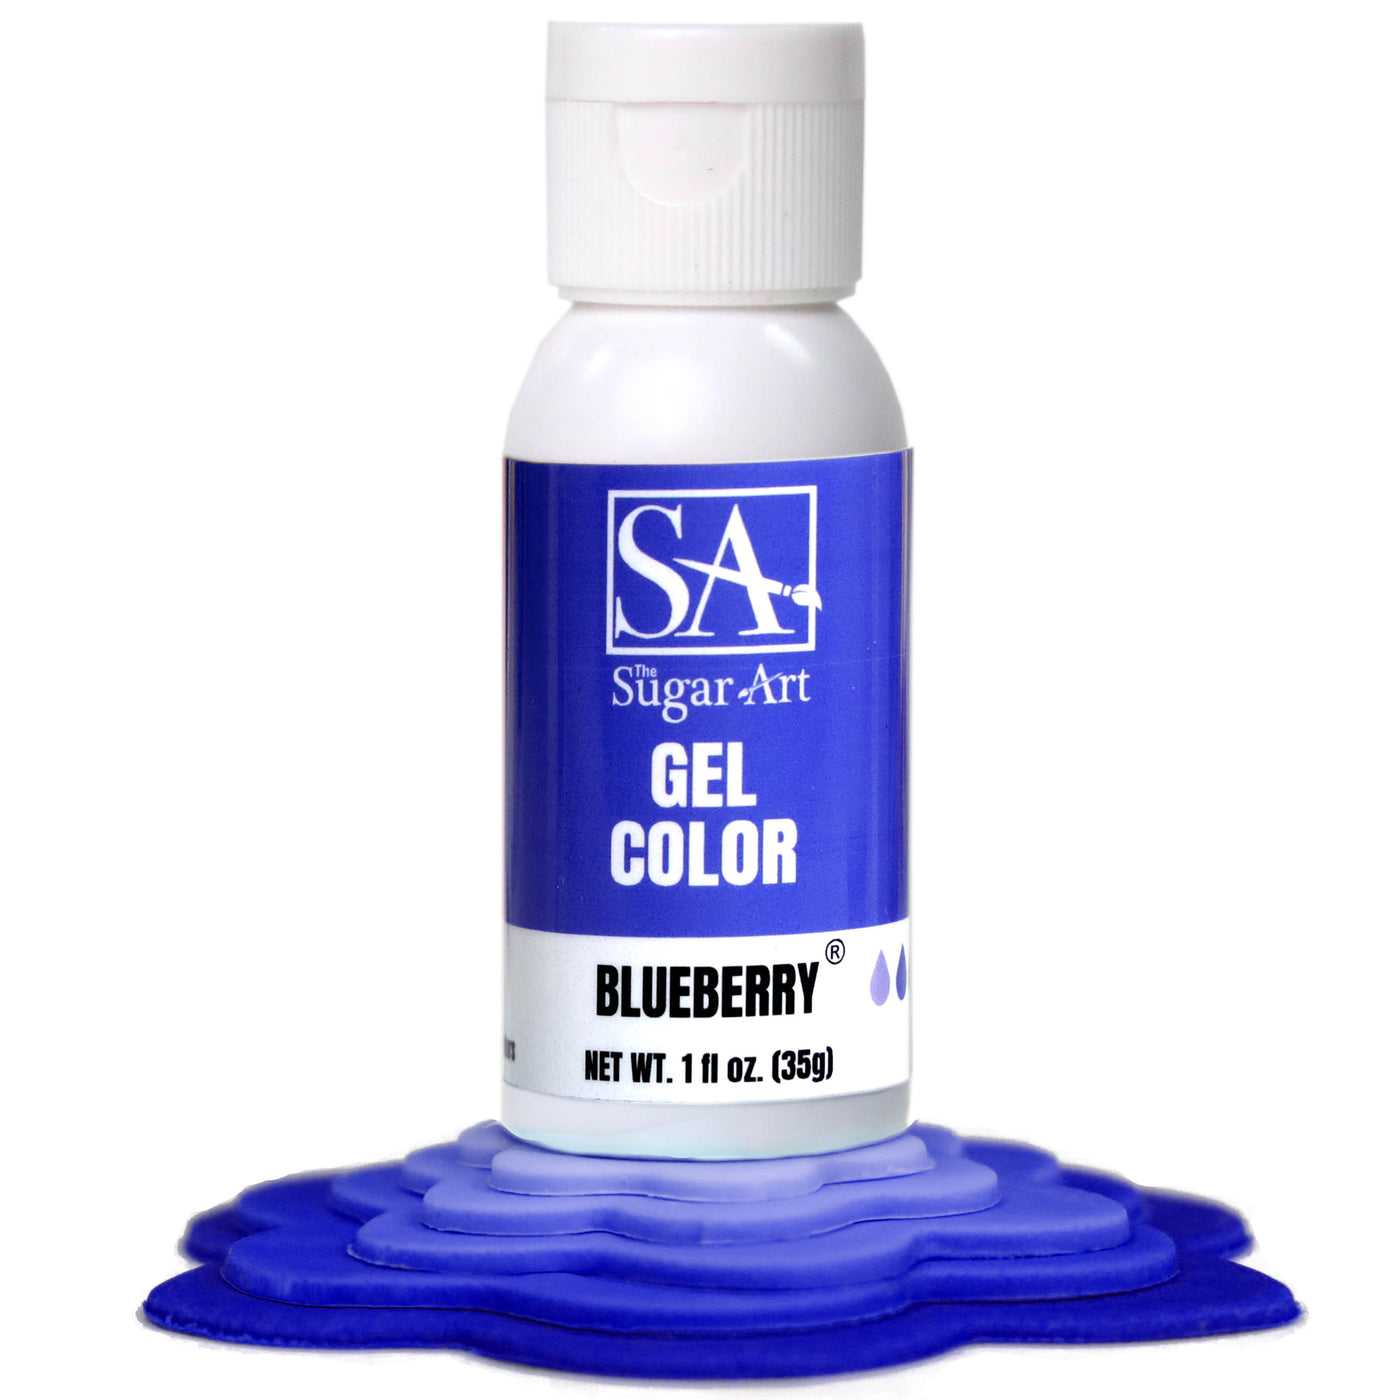 Blueberry Gel Color - The Sugar Art, Inc.